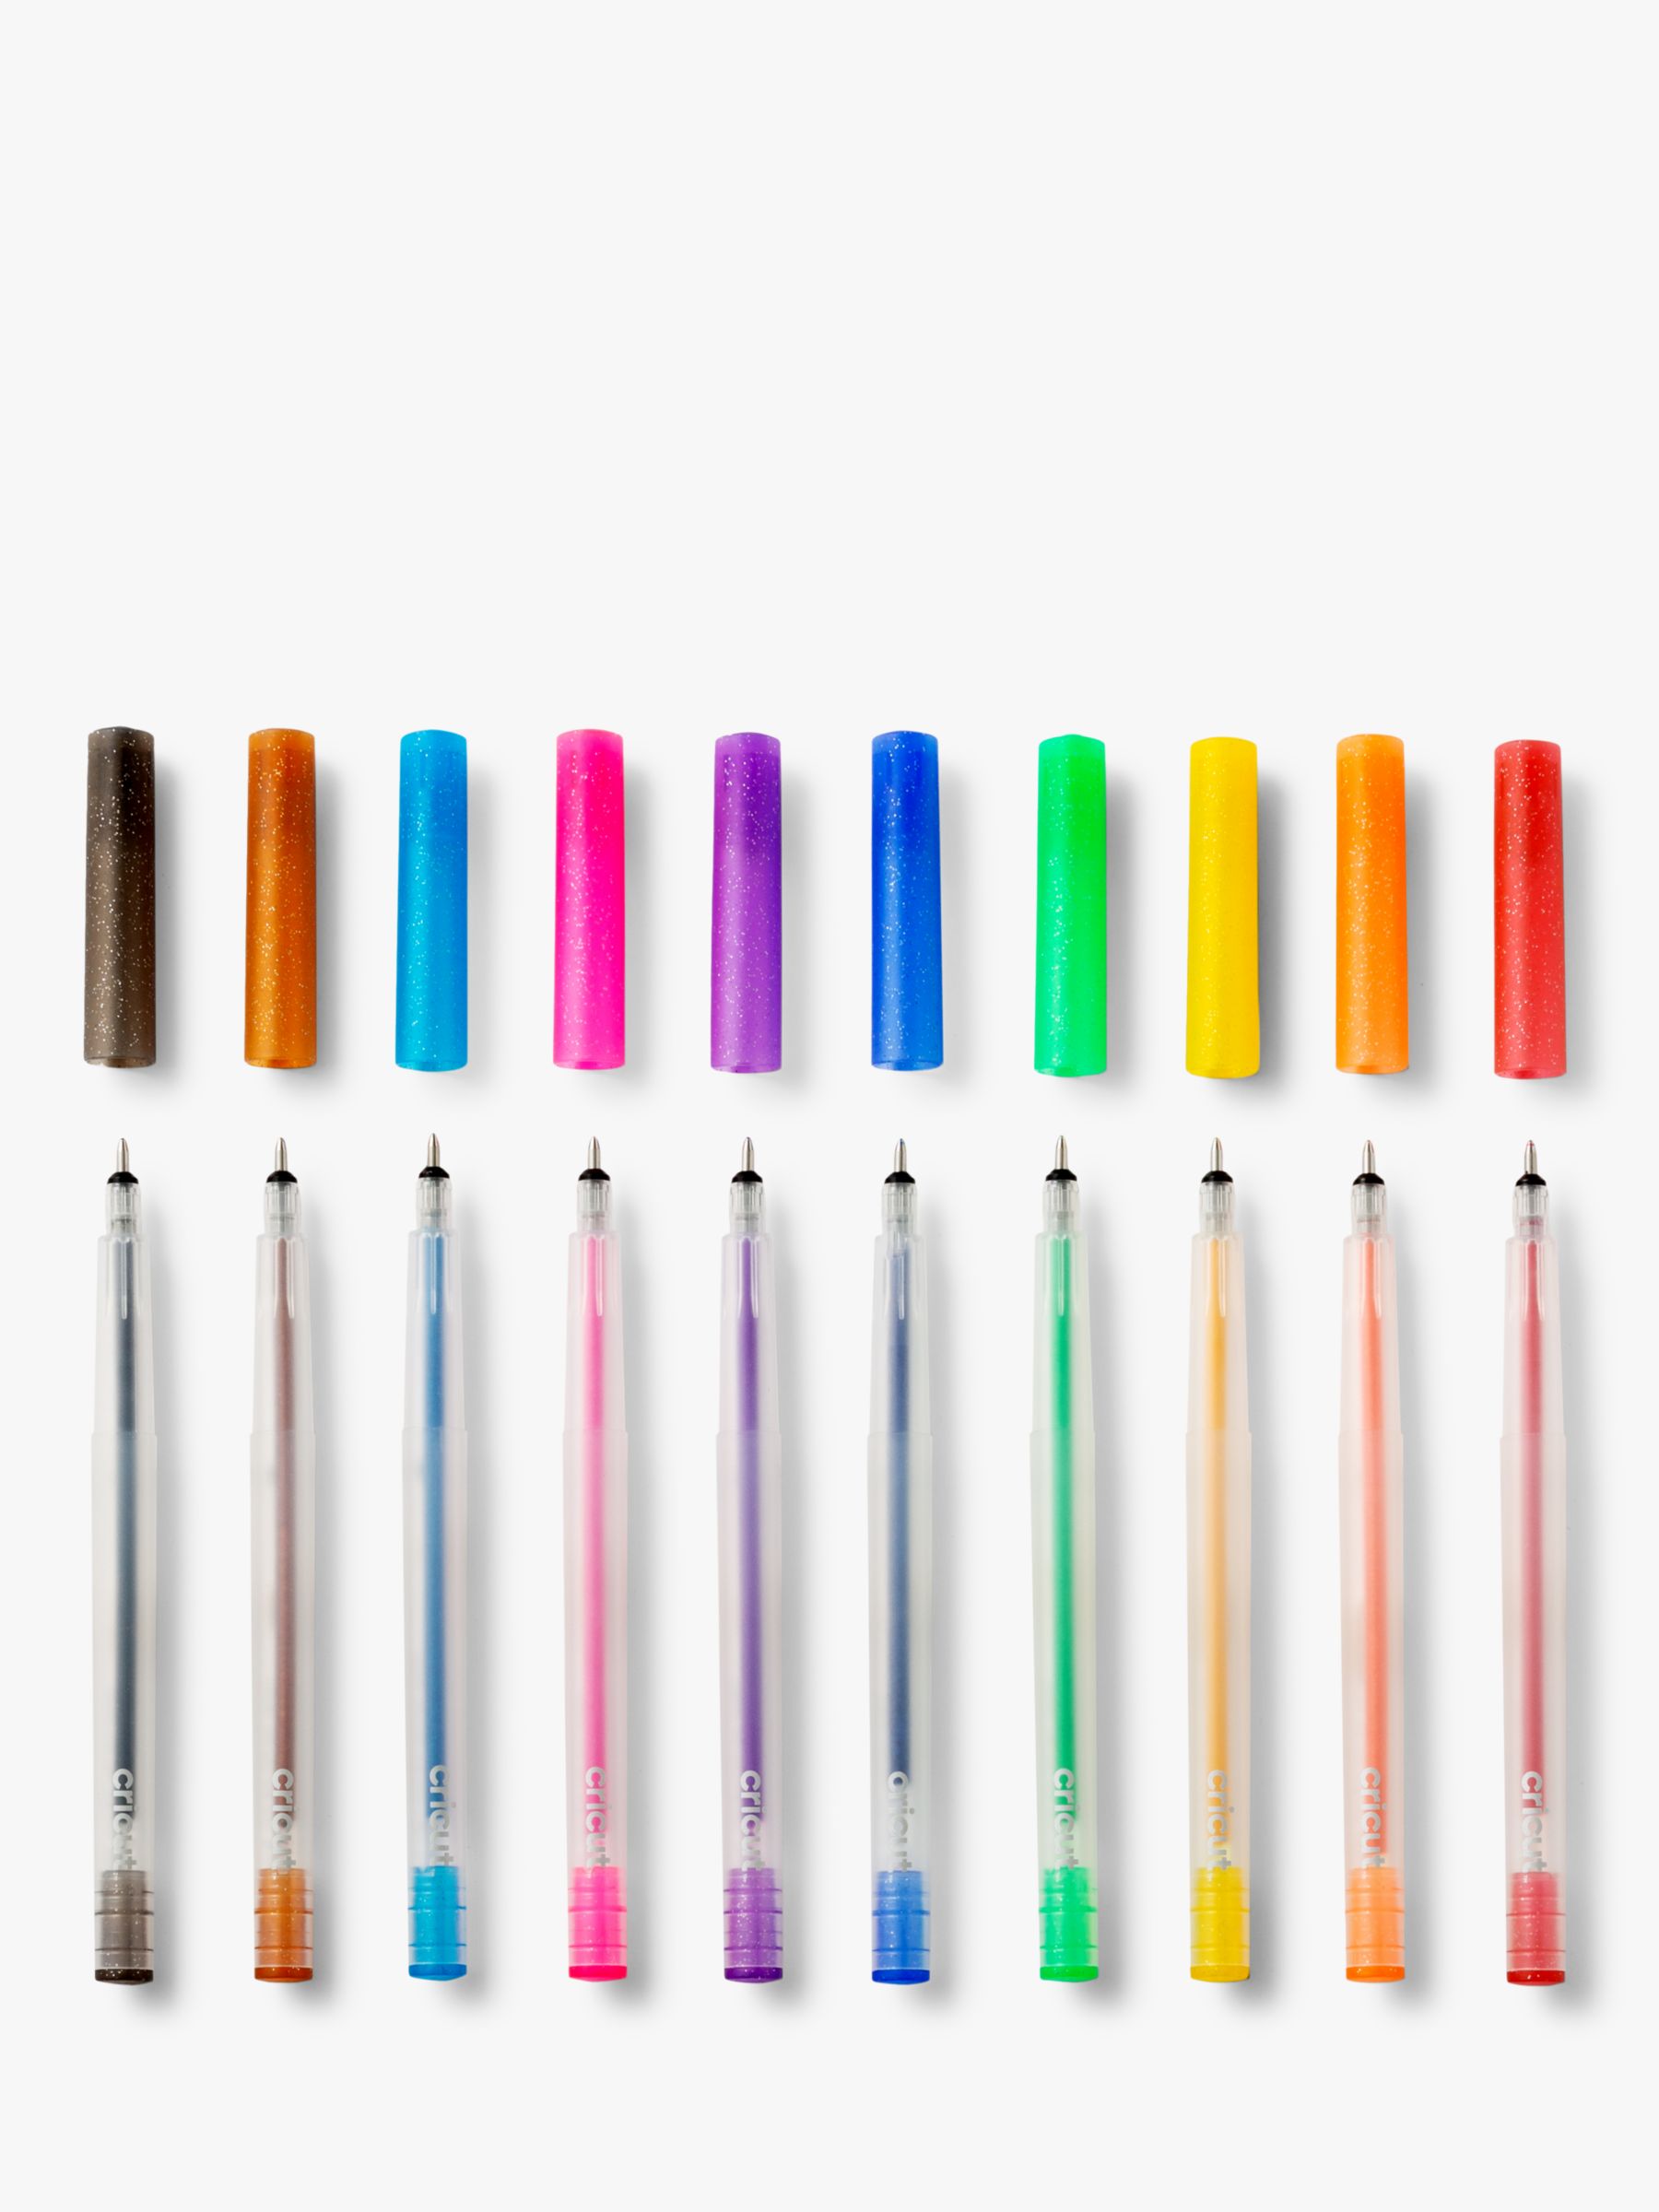 Cricut 5-count Opaque Gel Pens